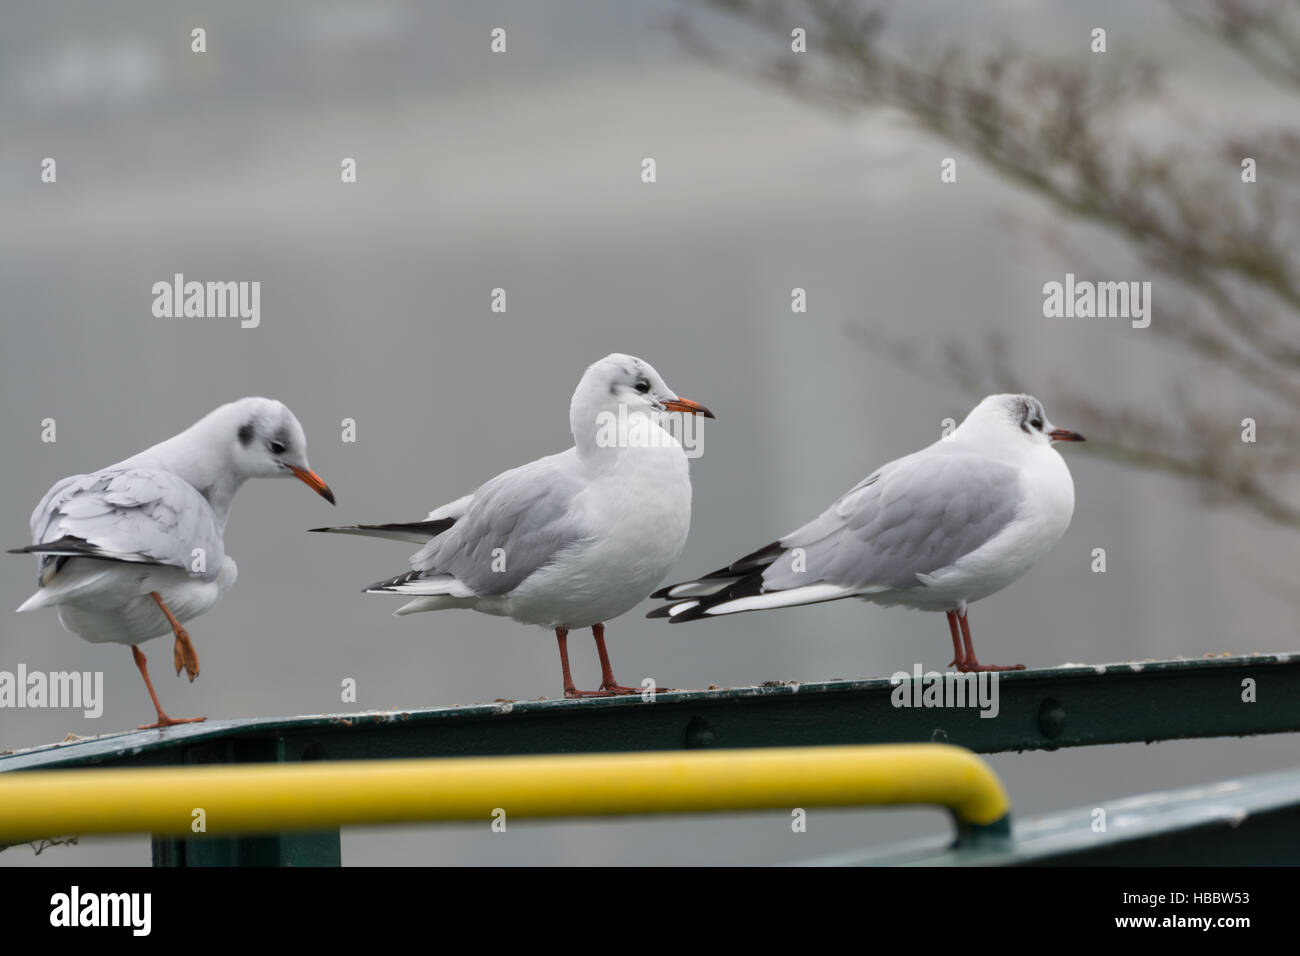 Three seagulls sitting on a metal railing Stock Photo